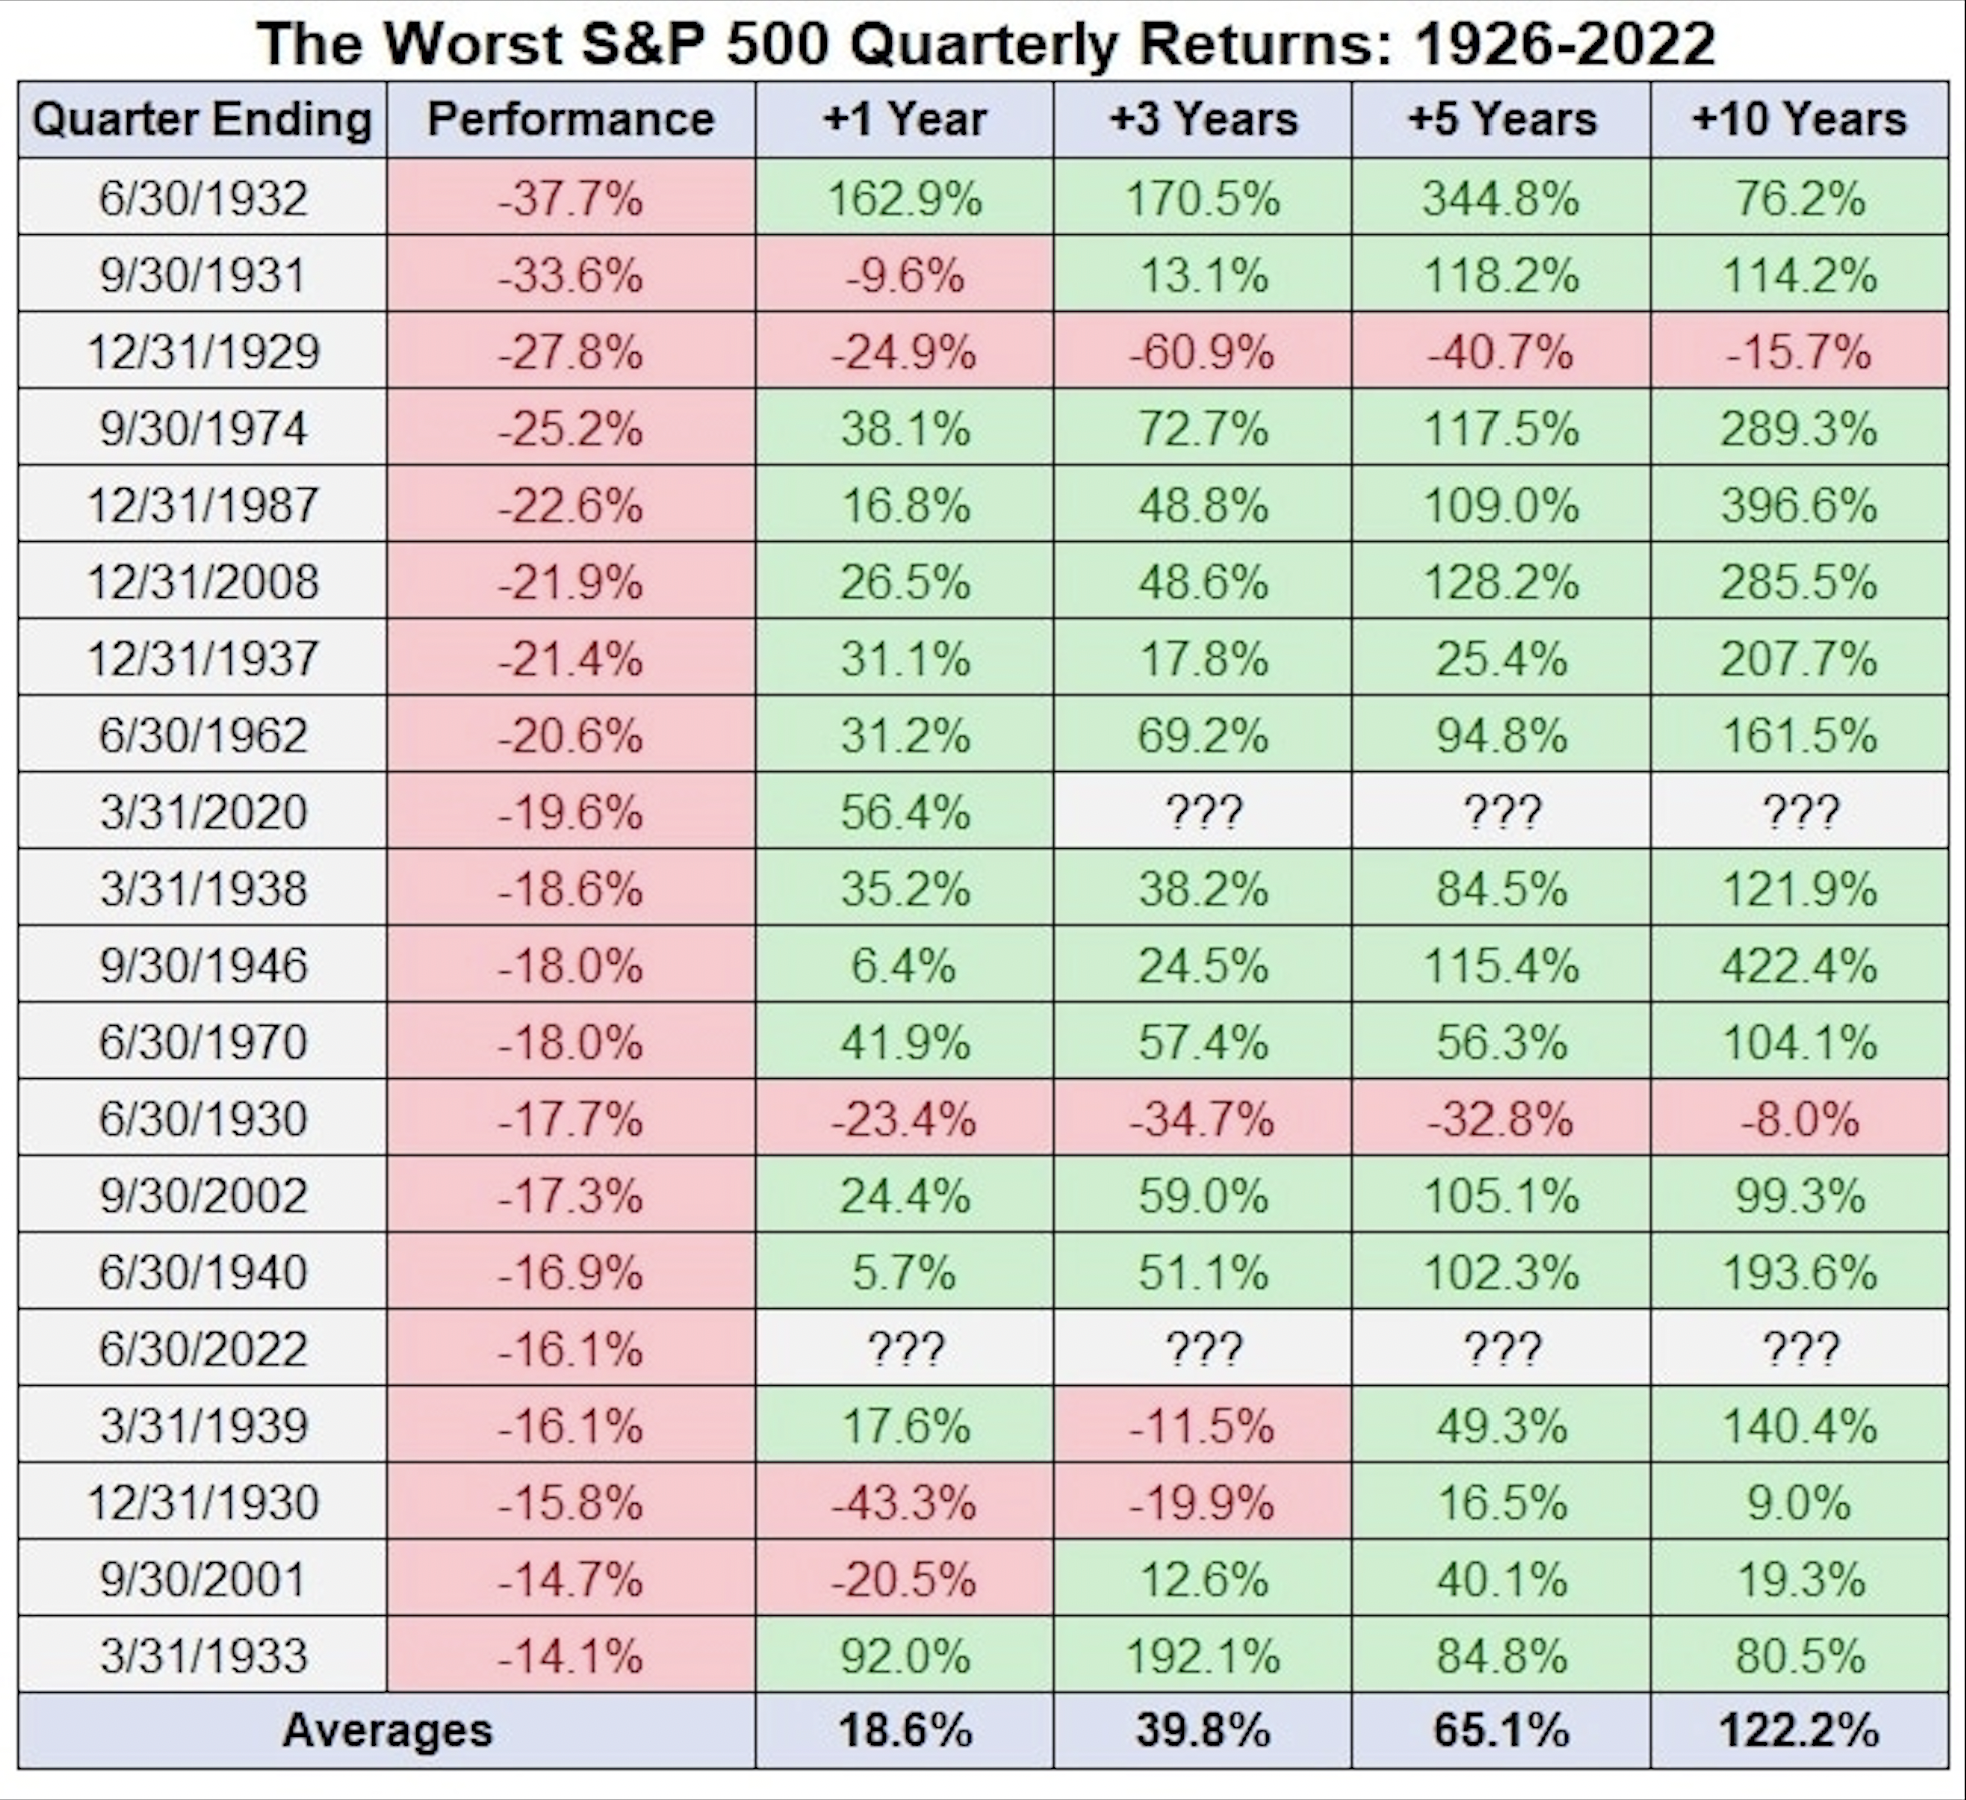 Worst S&P 500 Quarterly Returns In History